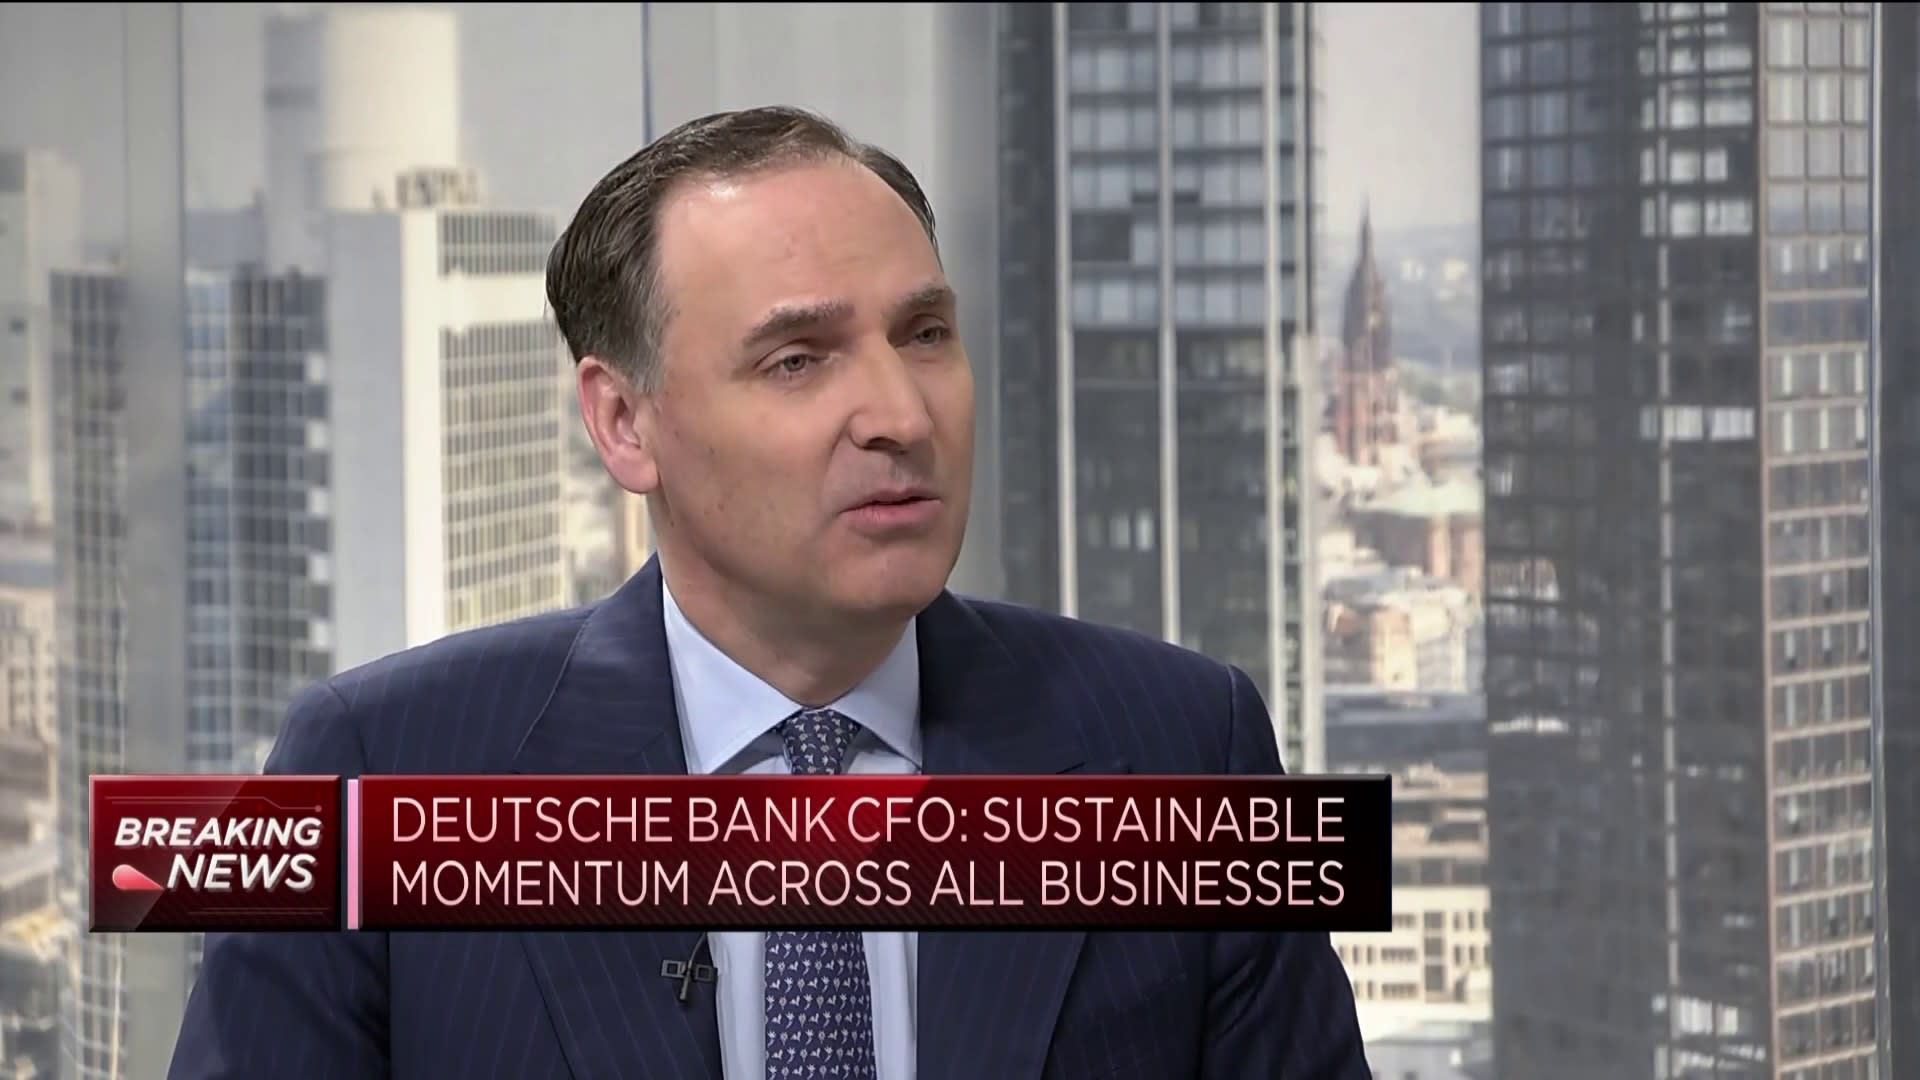 Deutsche Bank investment banking unit ‘standout’ in first quarter, CFO says [Video]